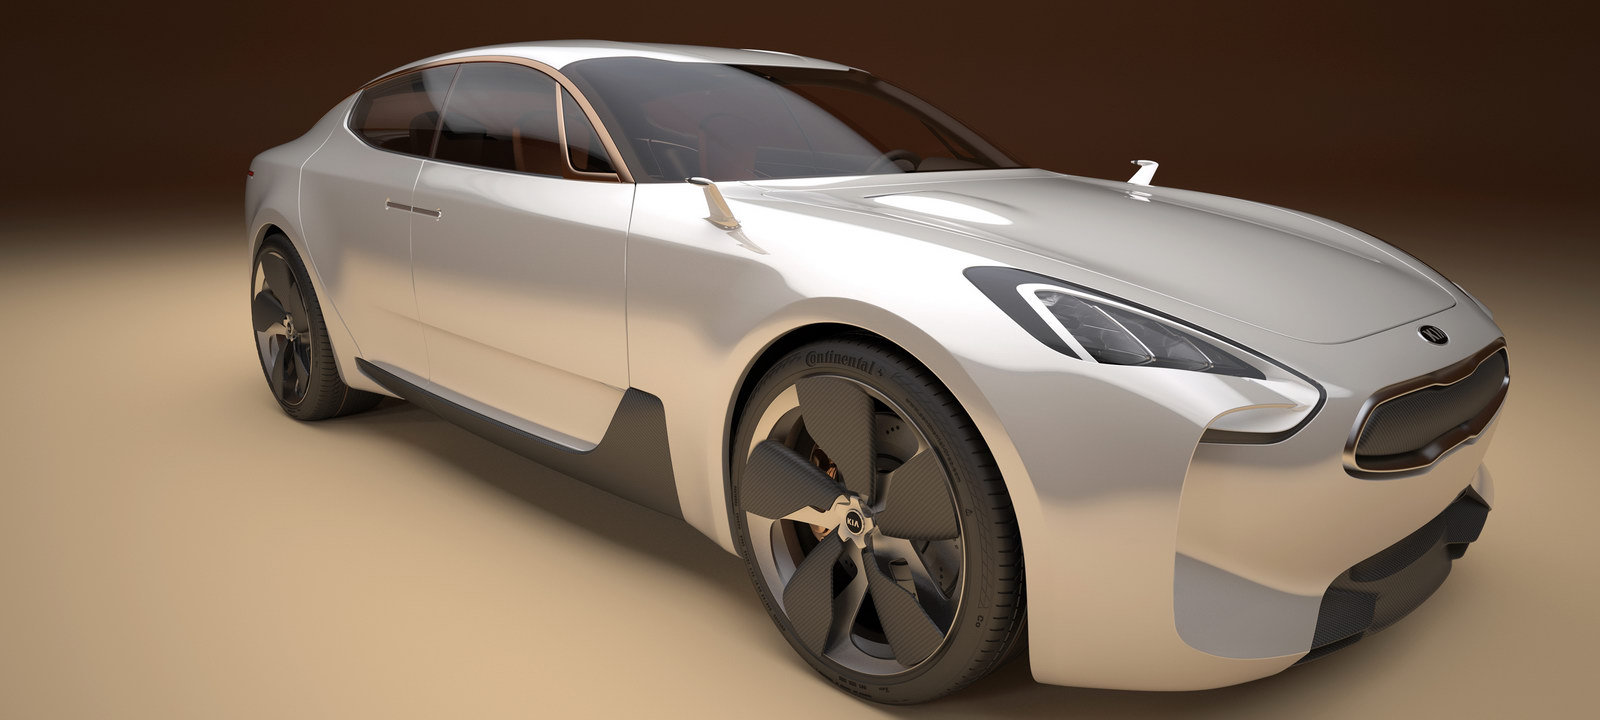 KIA GT Concept - prefigureaza primul model sportiv cu tractiune spate KIA